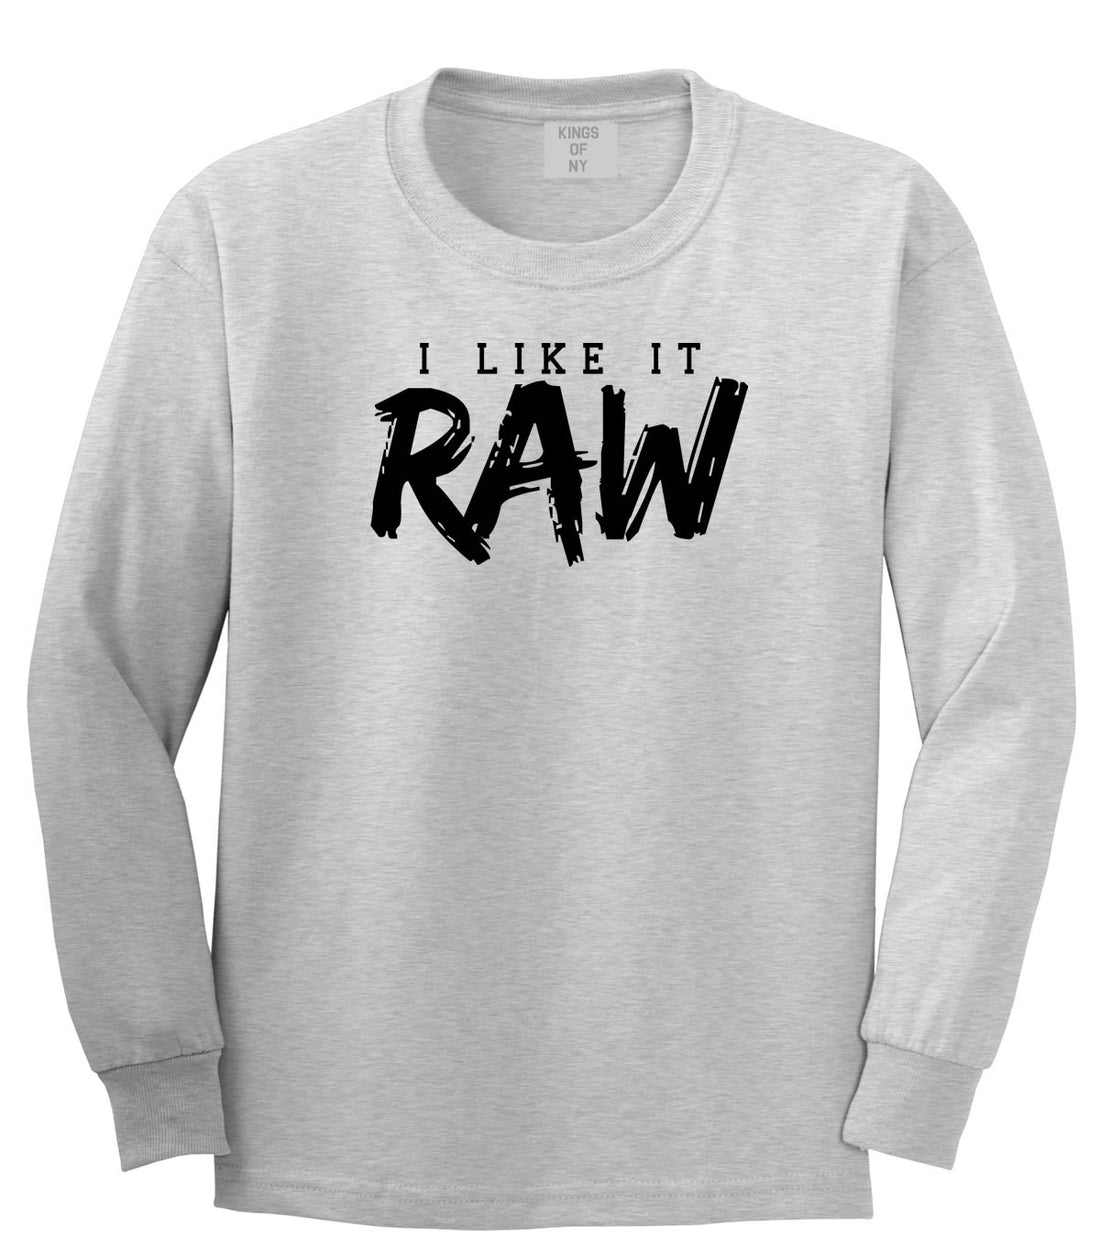 I Like It Raw Long Sleeve T-Shirt in Grey By Kings Of NY